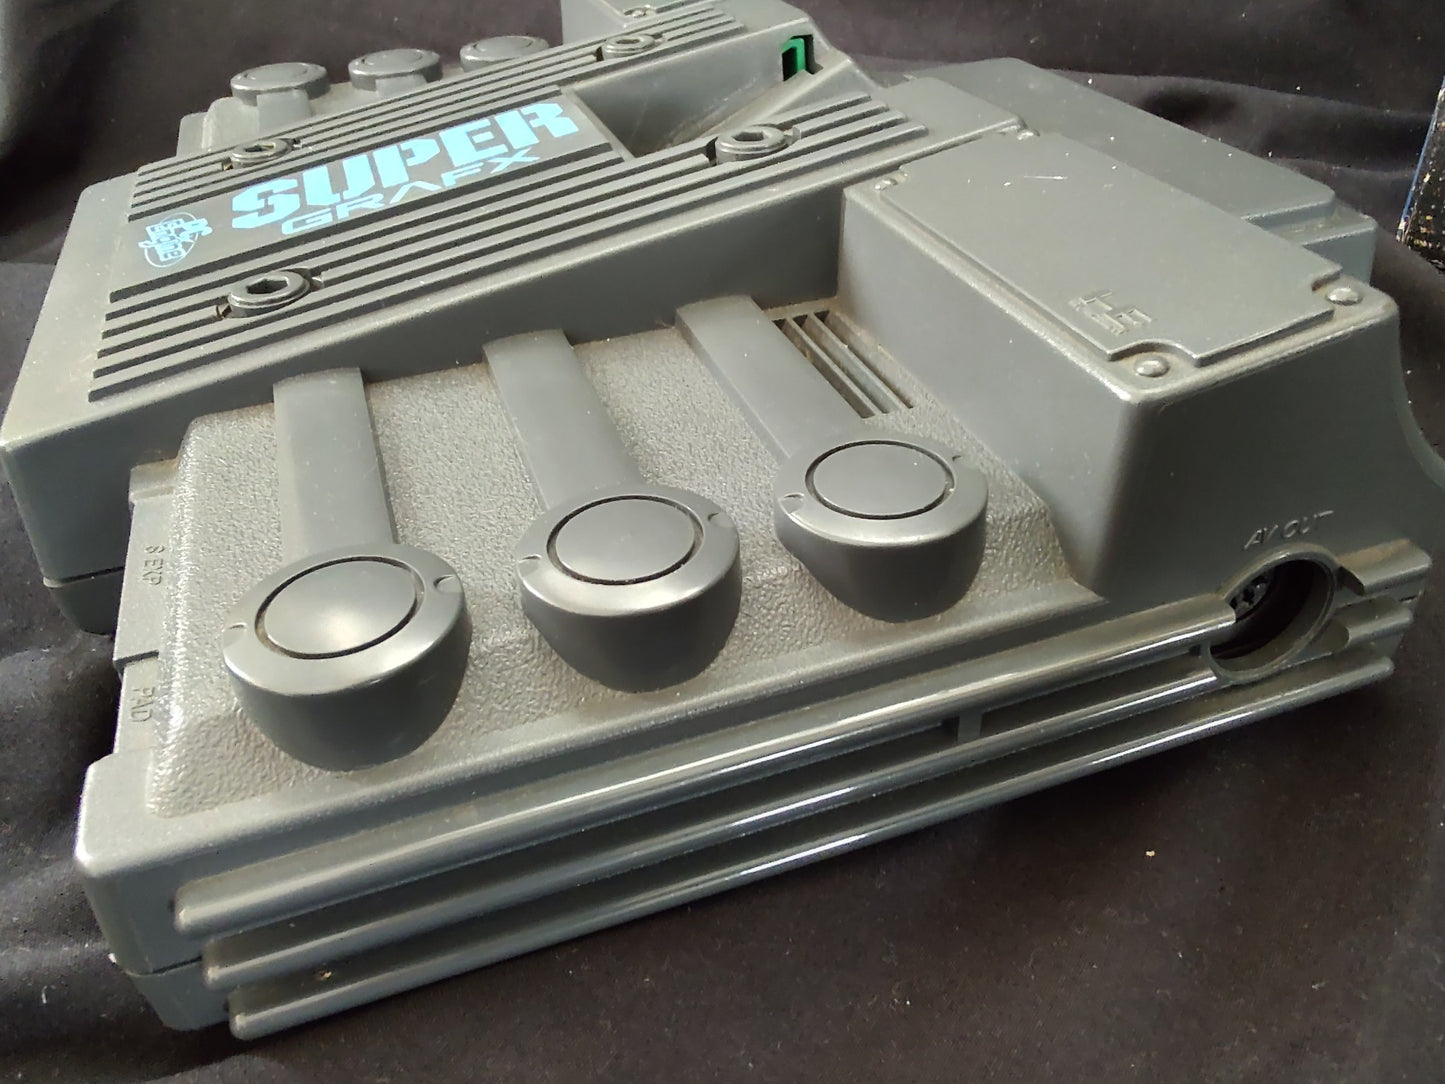 NEC PC Engine SuperGrafx PI-TG4 Console,w/Pad, PSU, AV cable, Box, Working-f1014